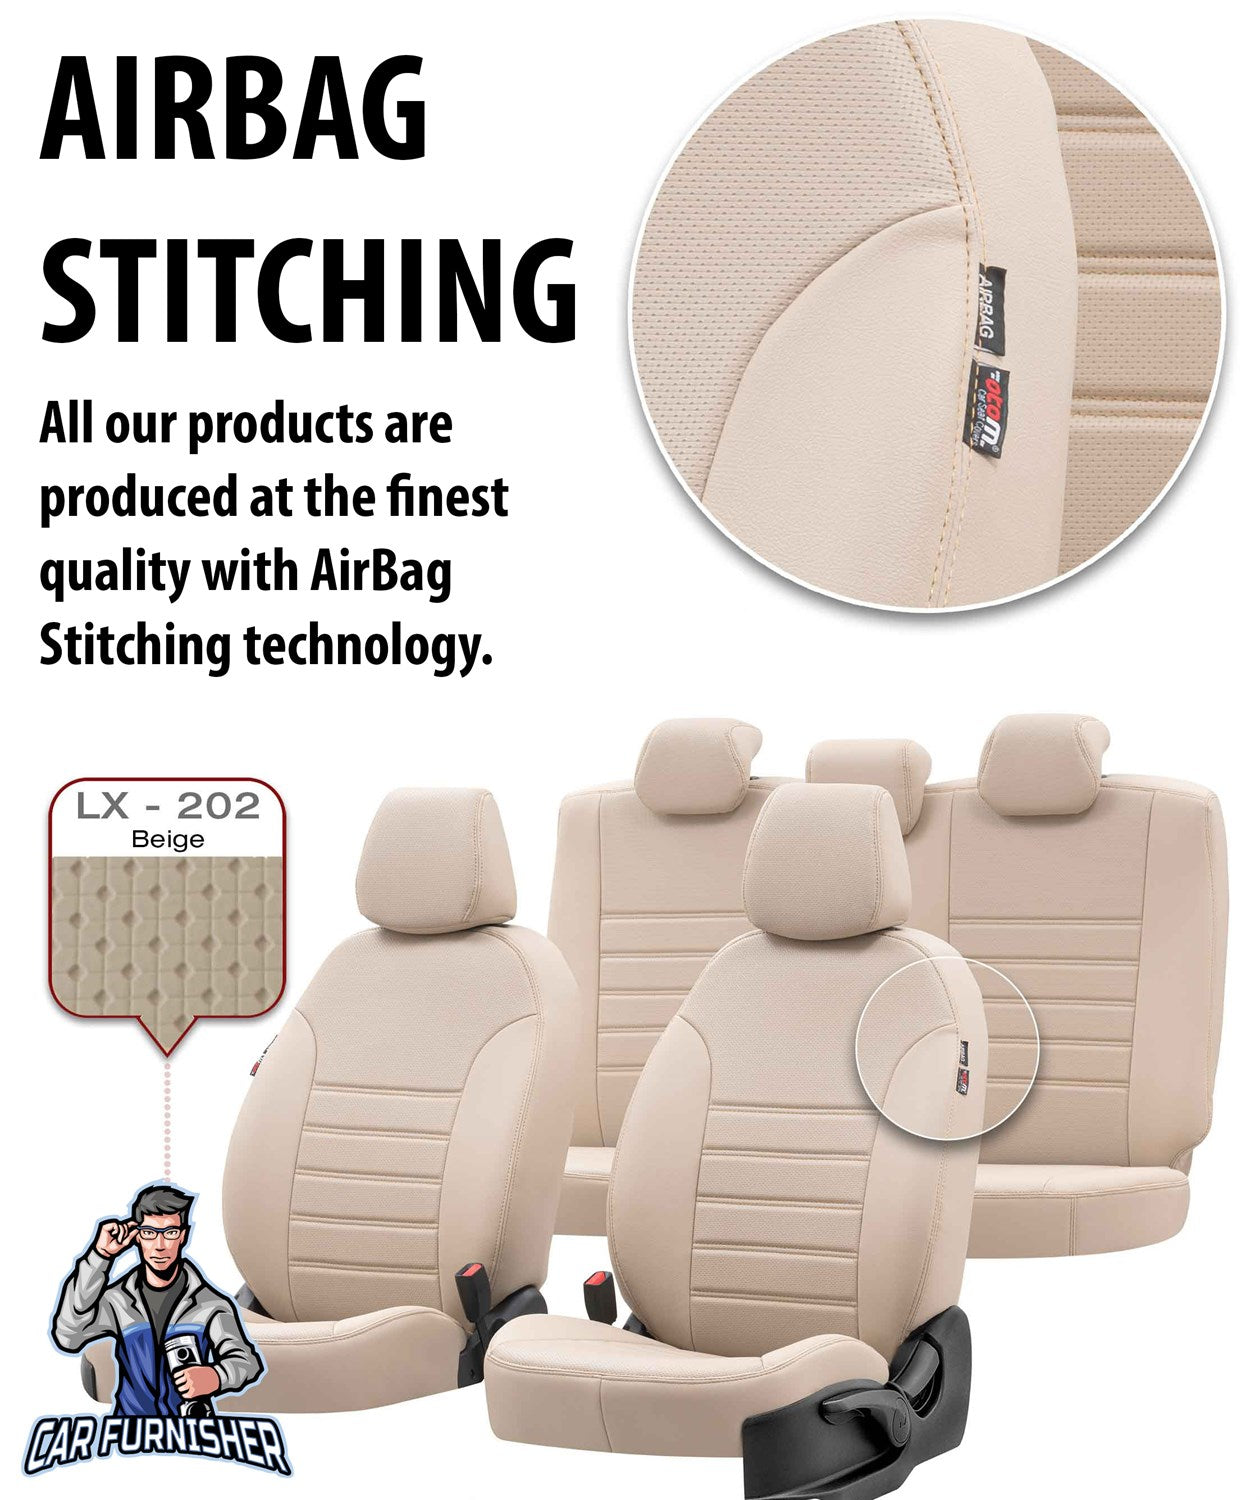 Tata Xenon Seat Covers New York Leather Design Smoked Leather